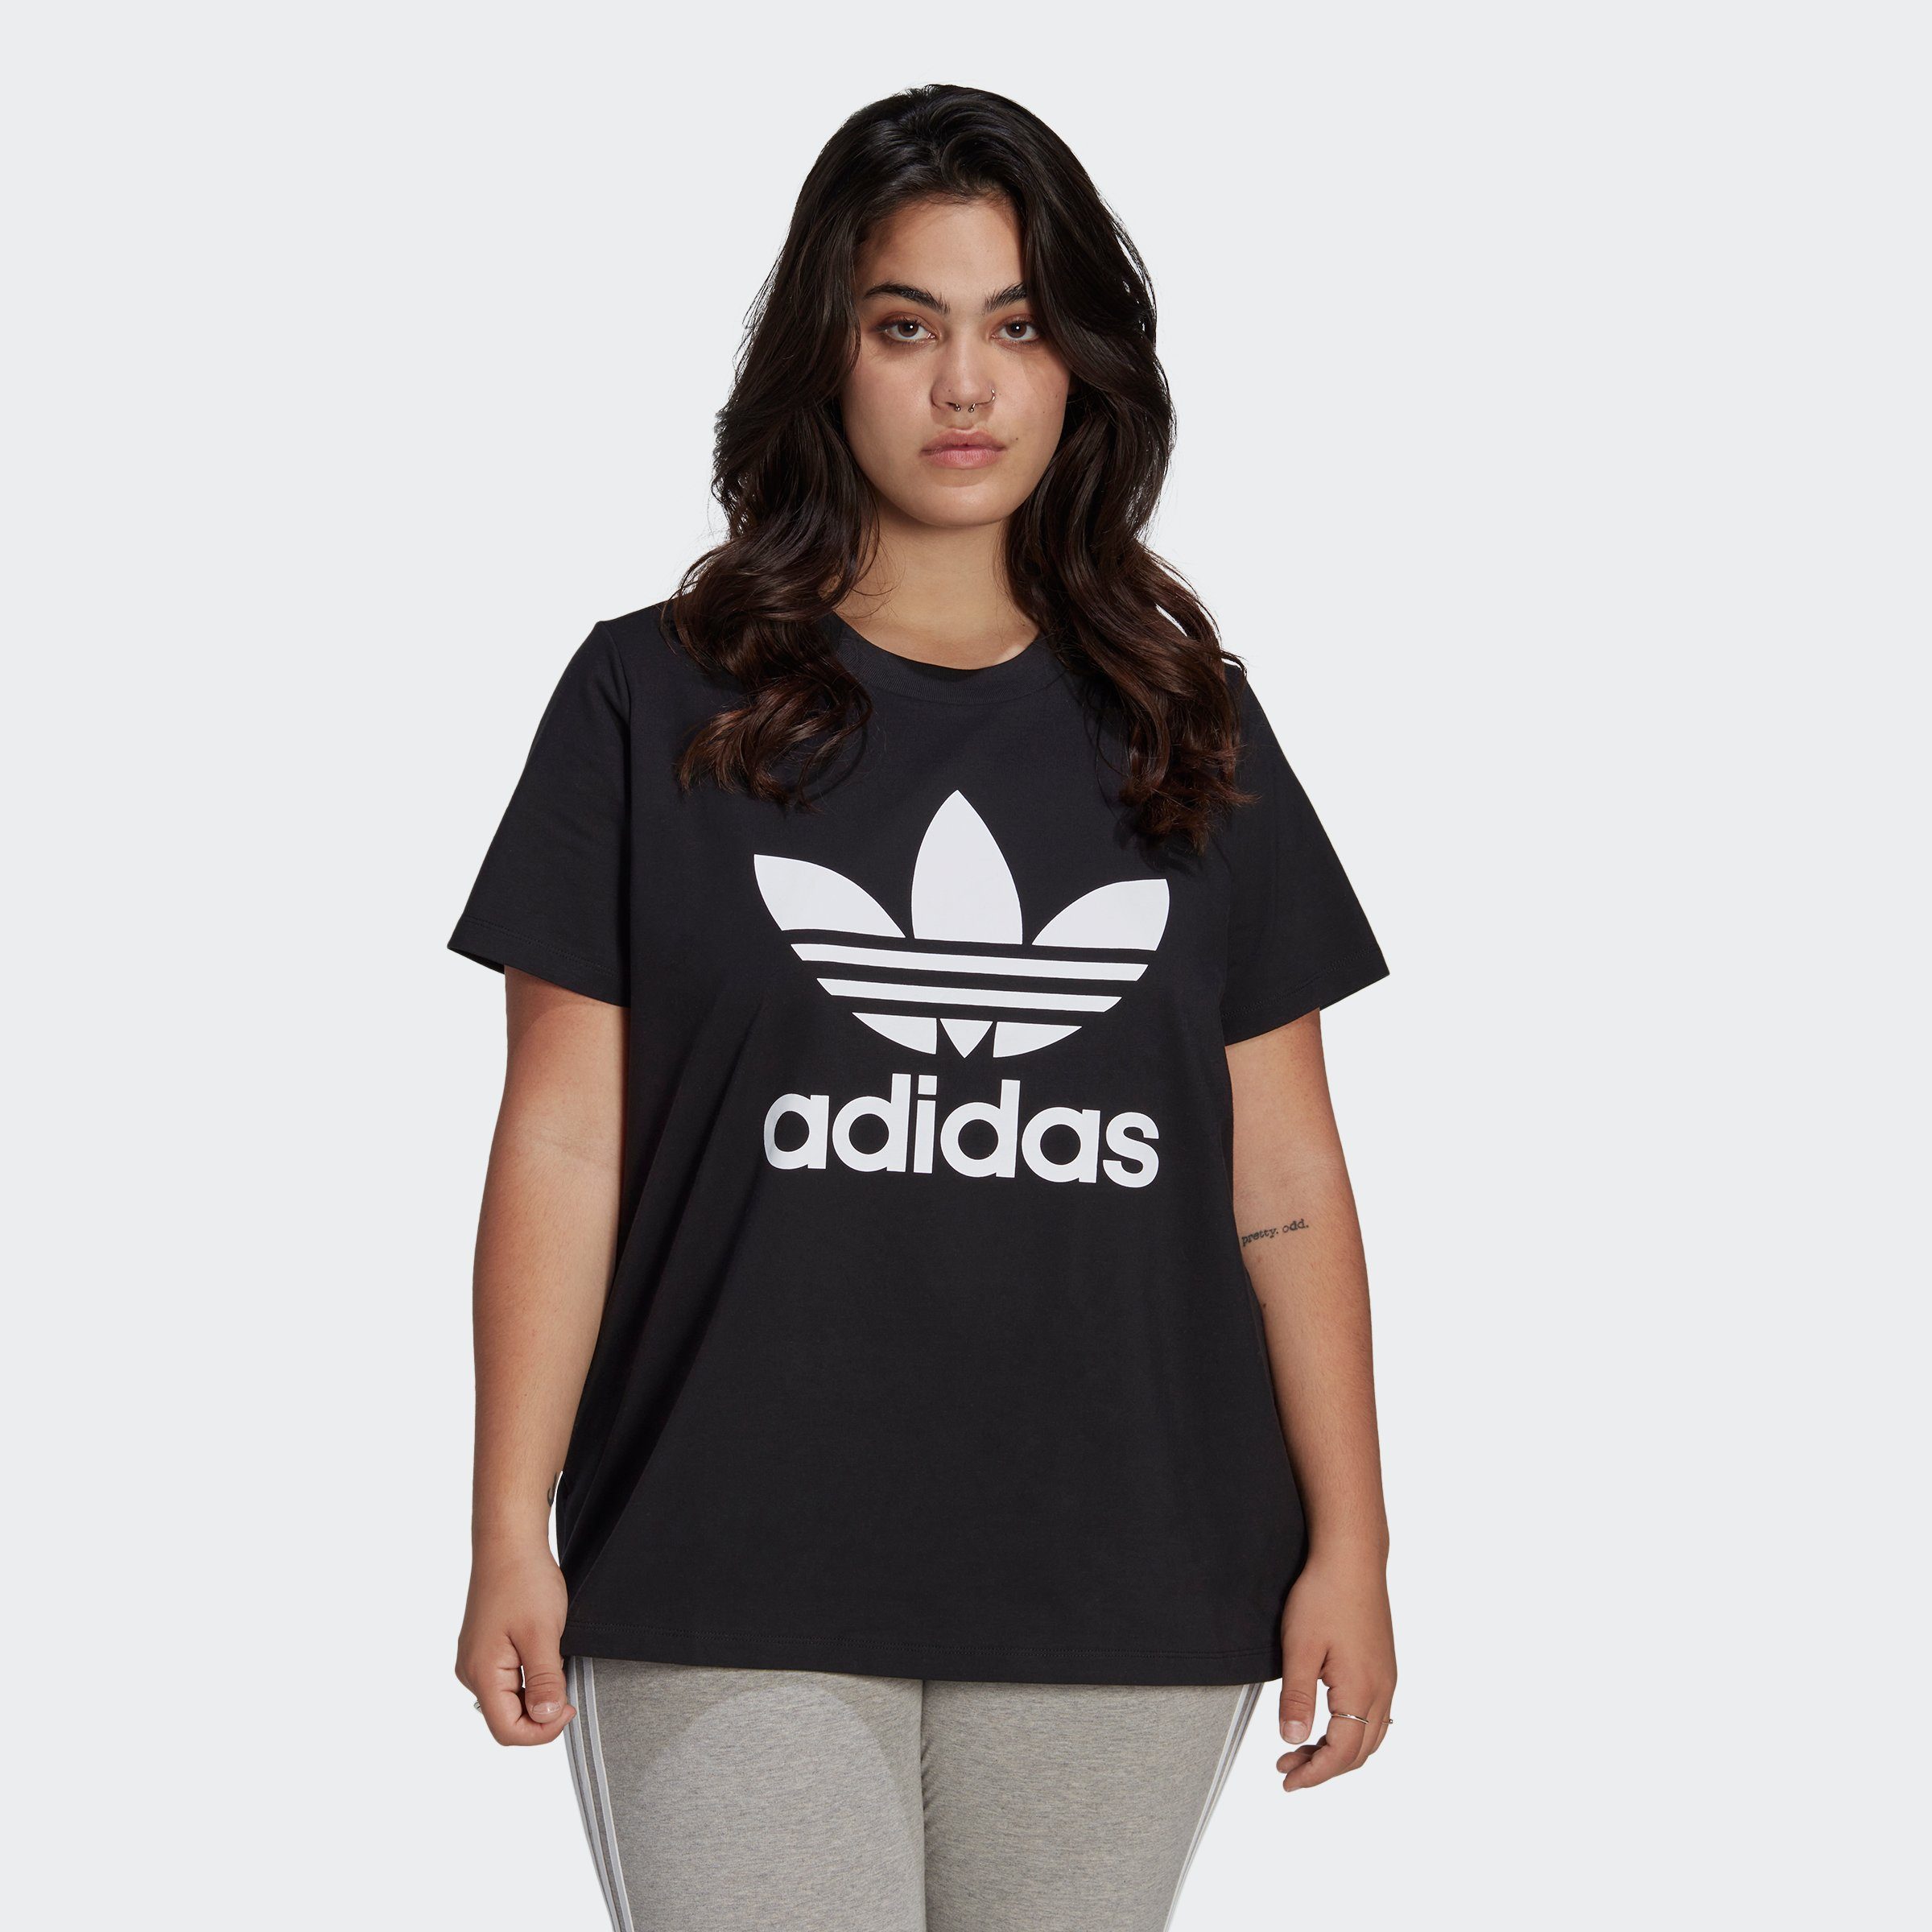 adidas – T-Shirt Black ADICOLOR TREFOIL Originals GROSSE CLASSICS GRÖSSEN